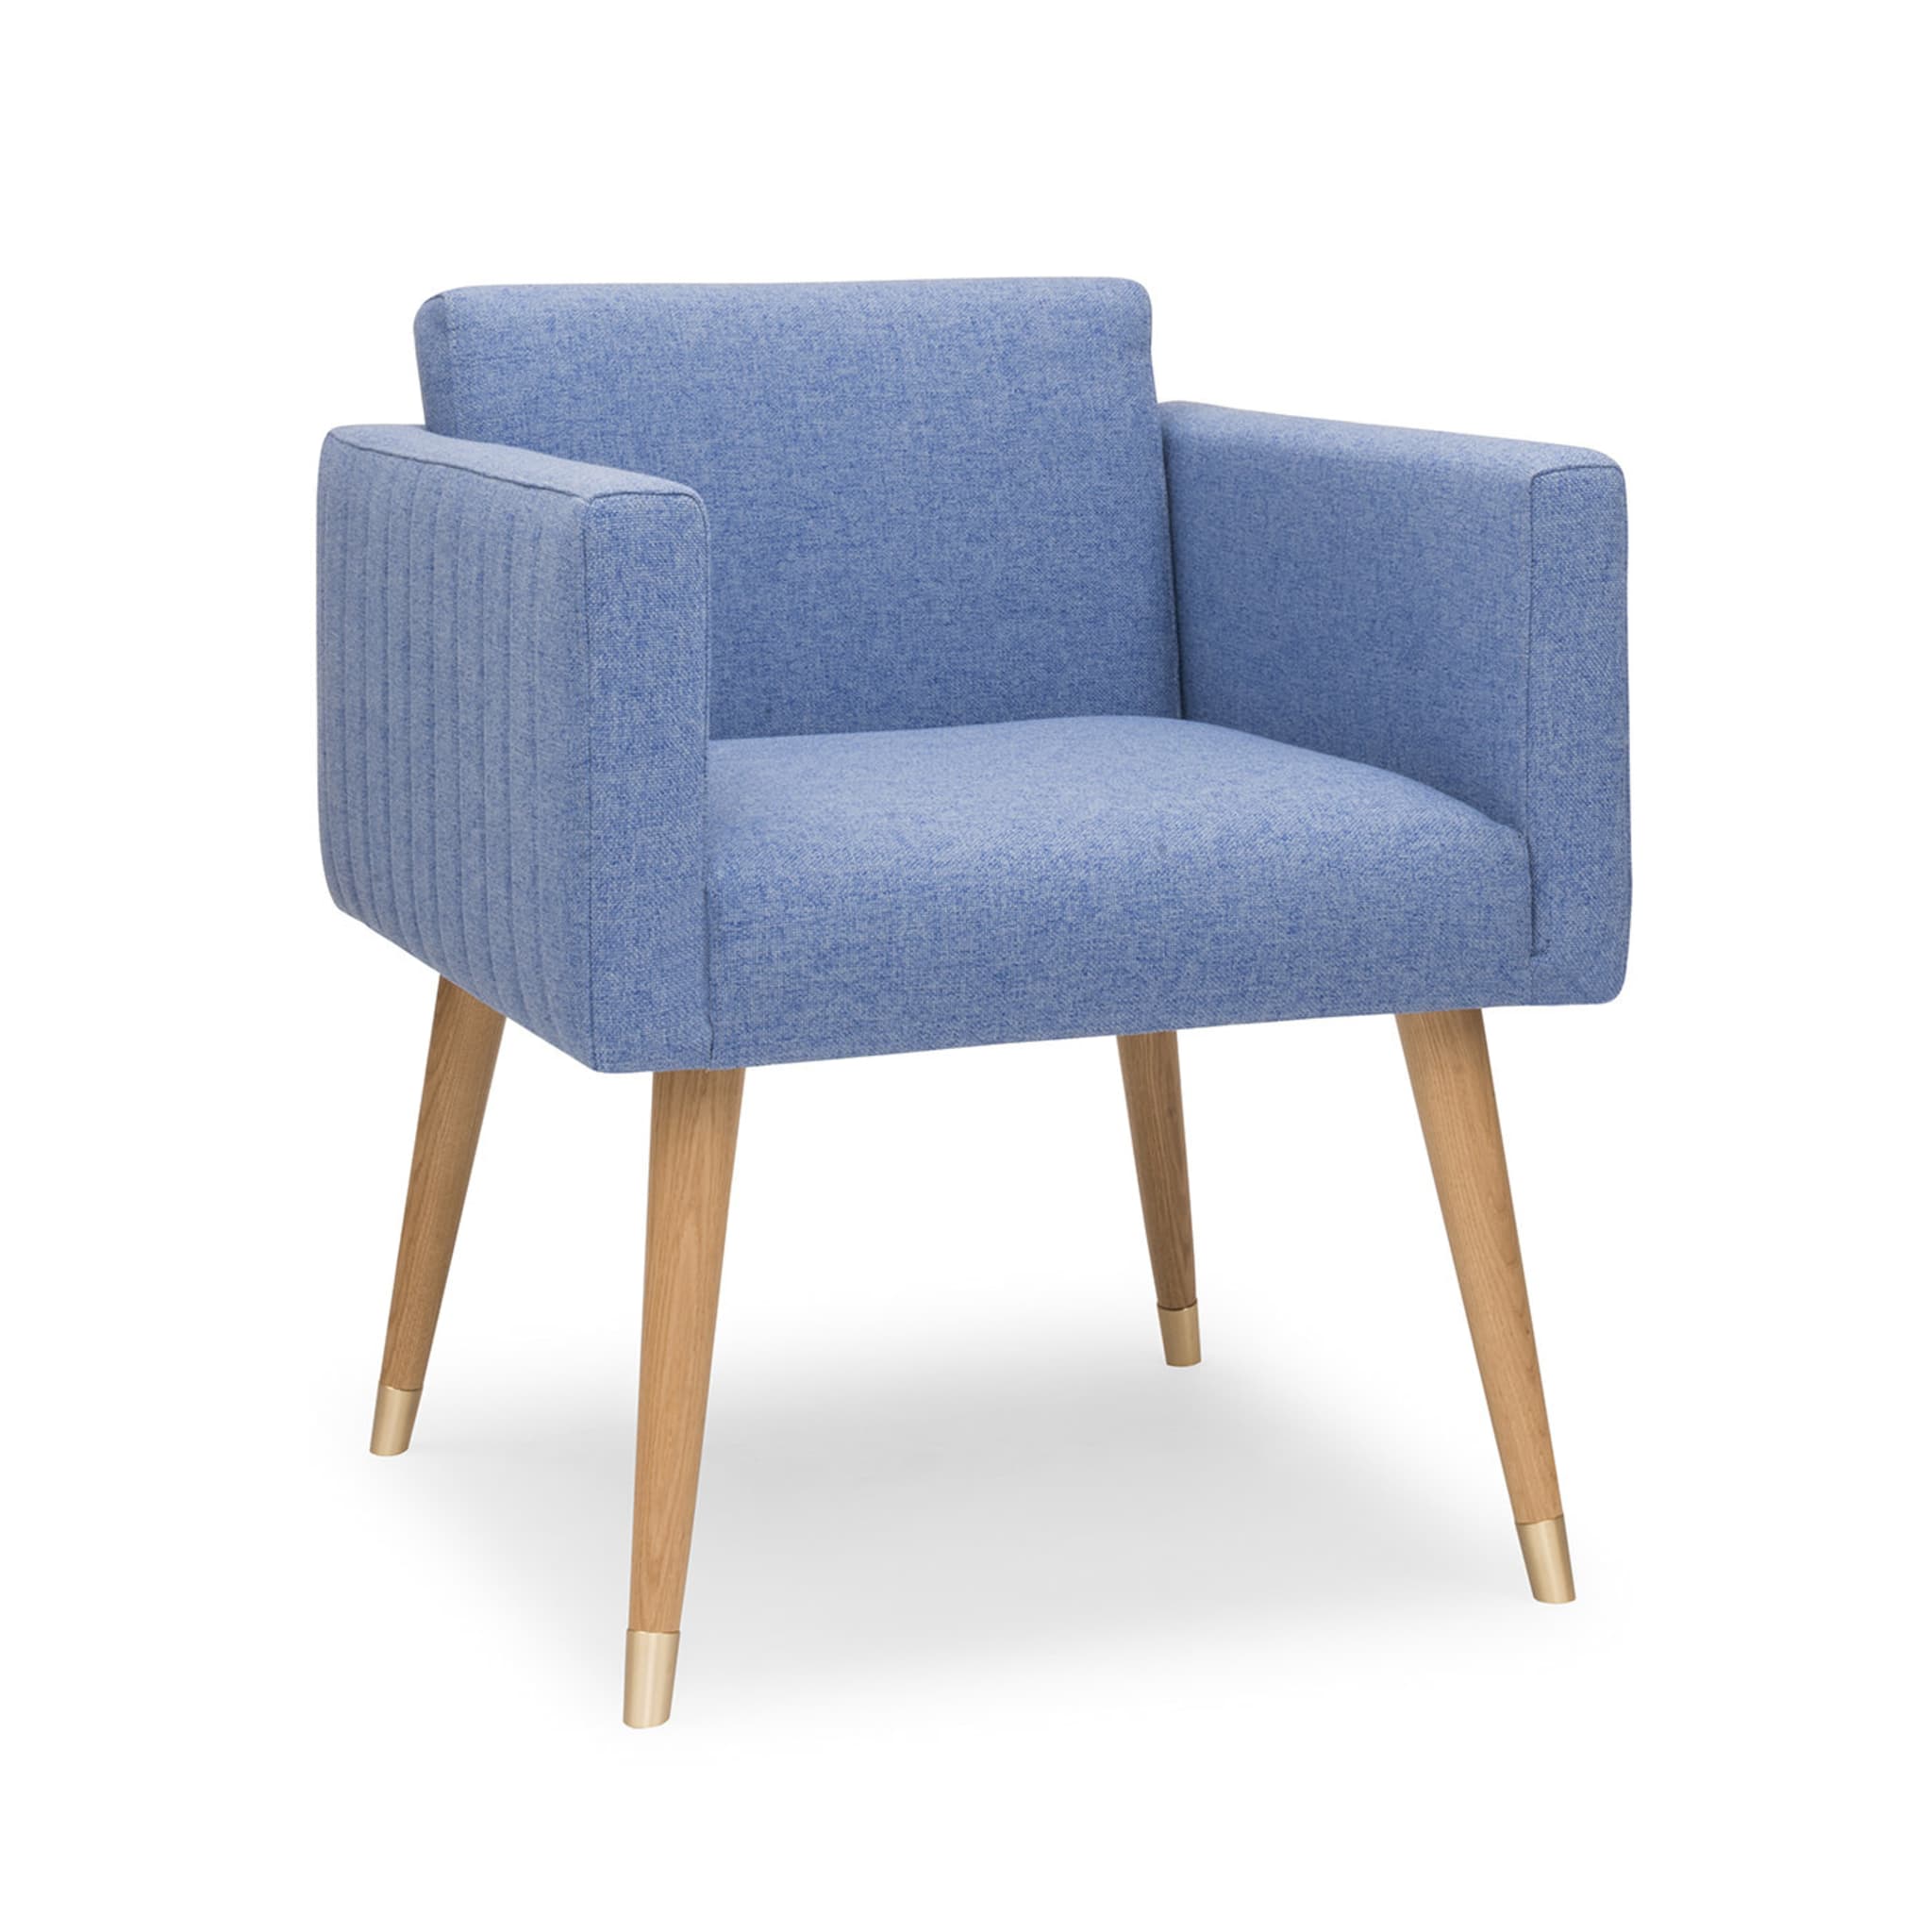 Pantarei Woodcone Blue Chair - Alternative view 1